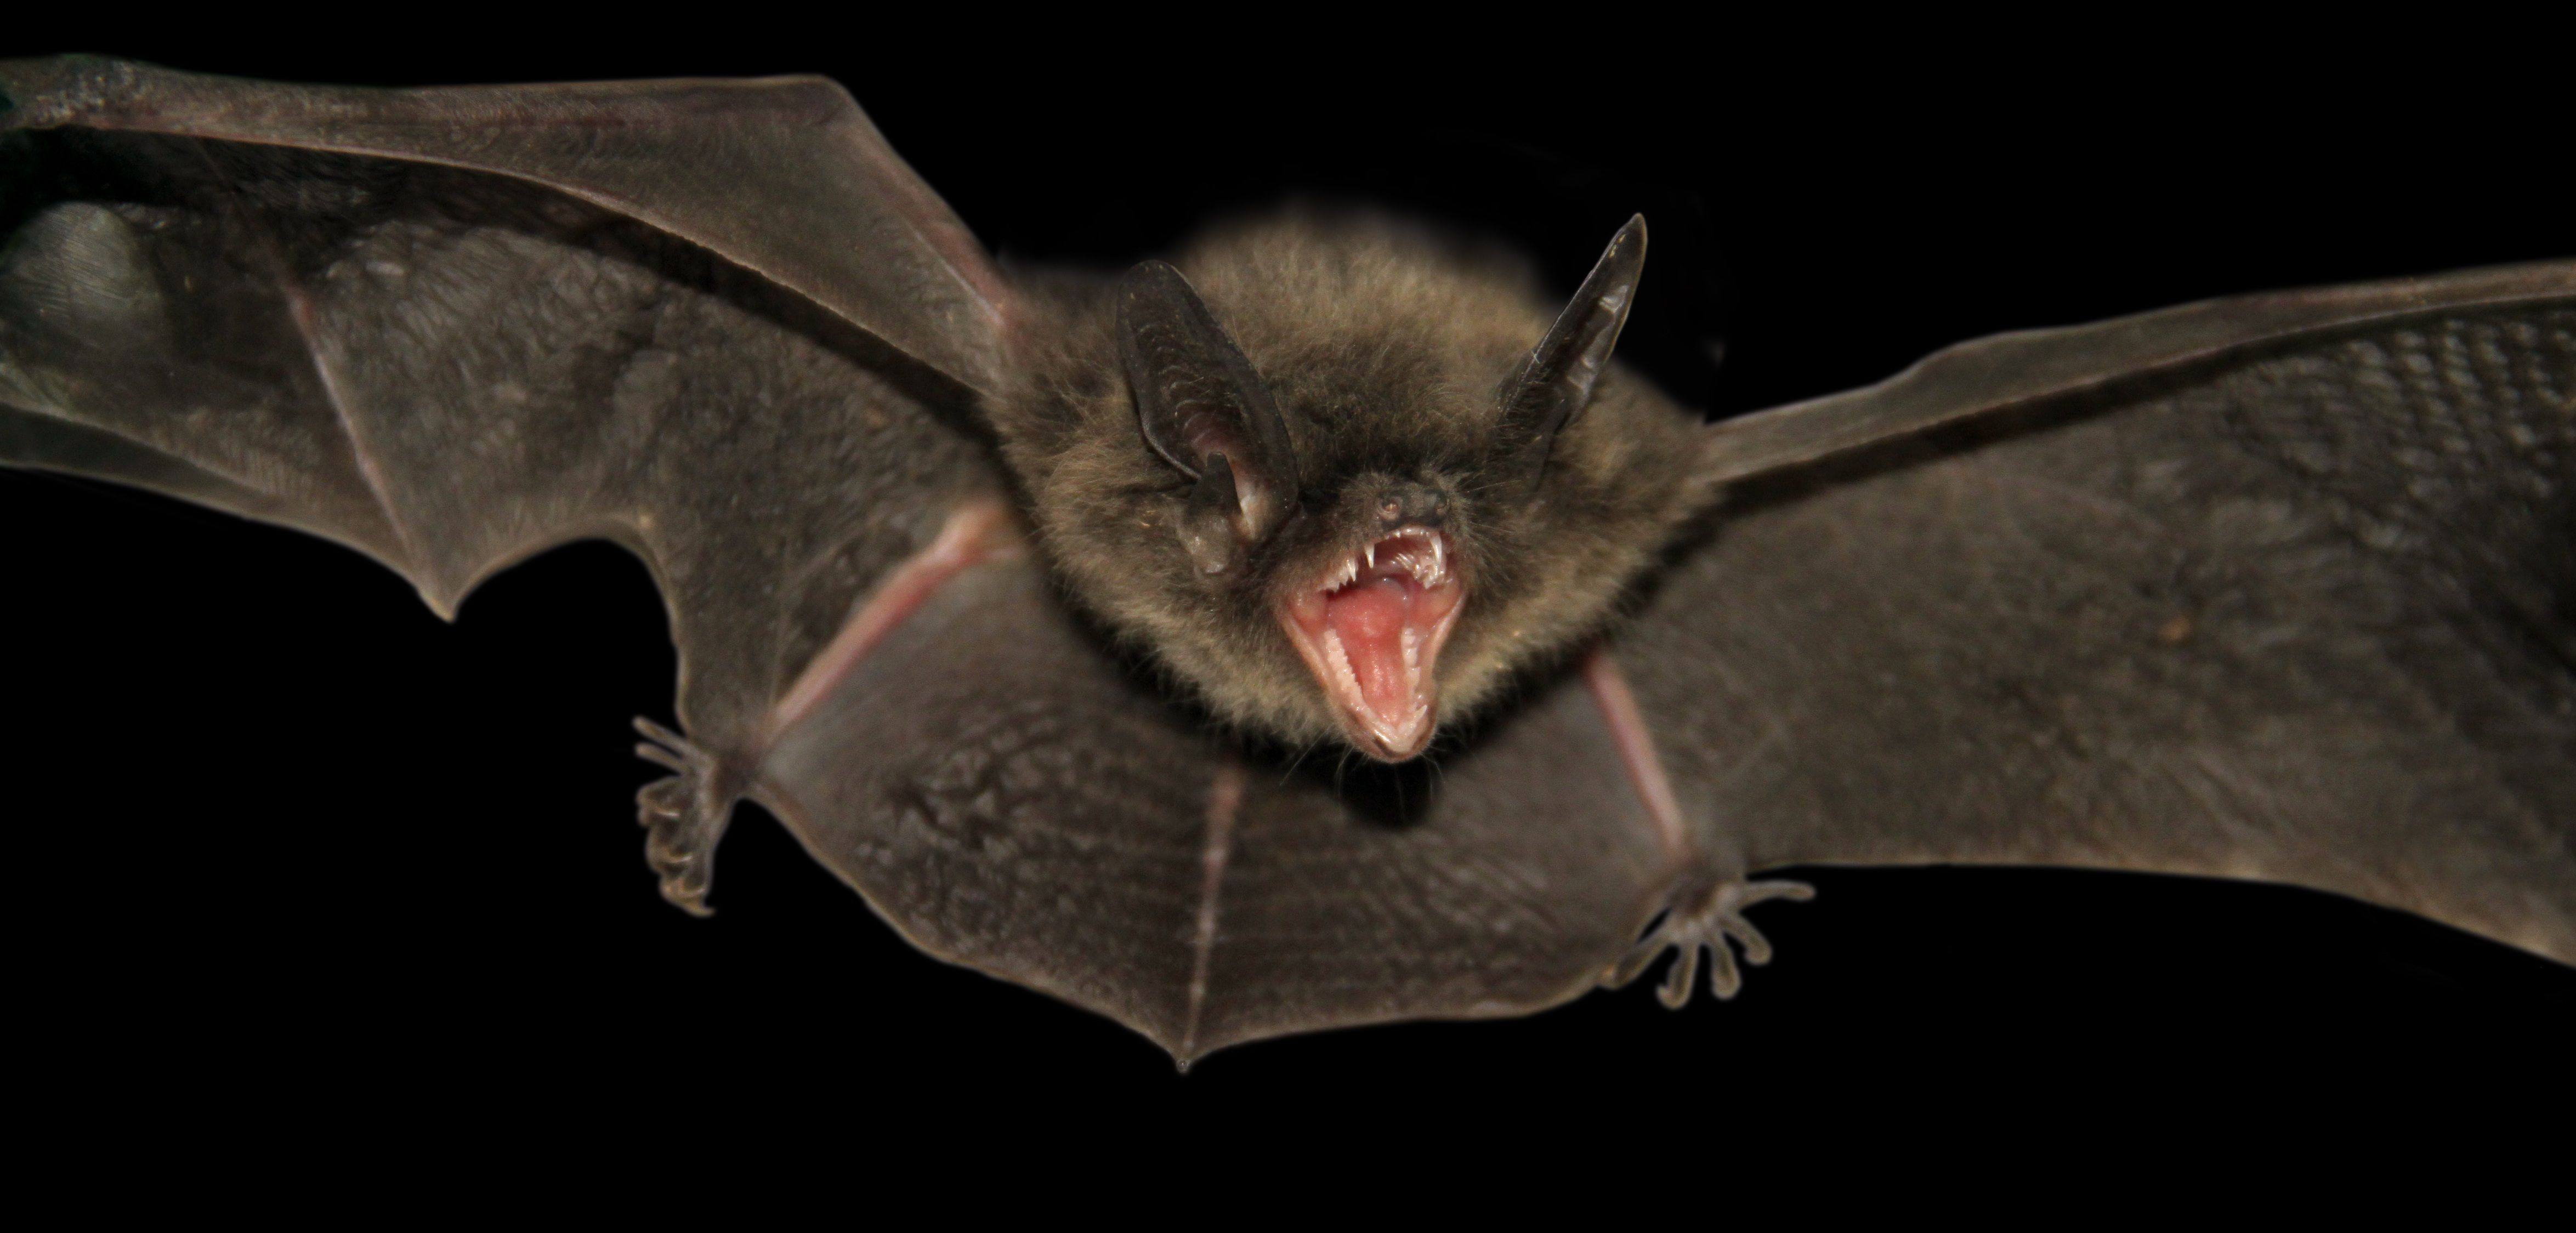 papel tapiz de murciélago,murciélago,murciélago vampiro,murciélago orejas de ratón,pequeño miotis marrón,gran murciélago marrón